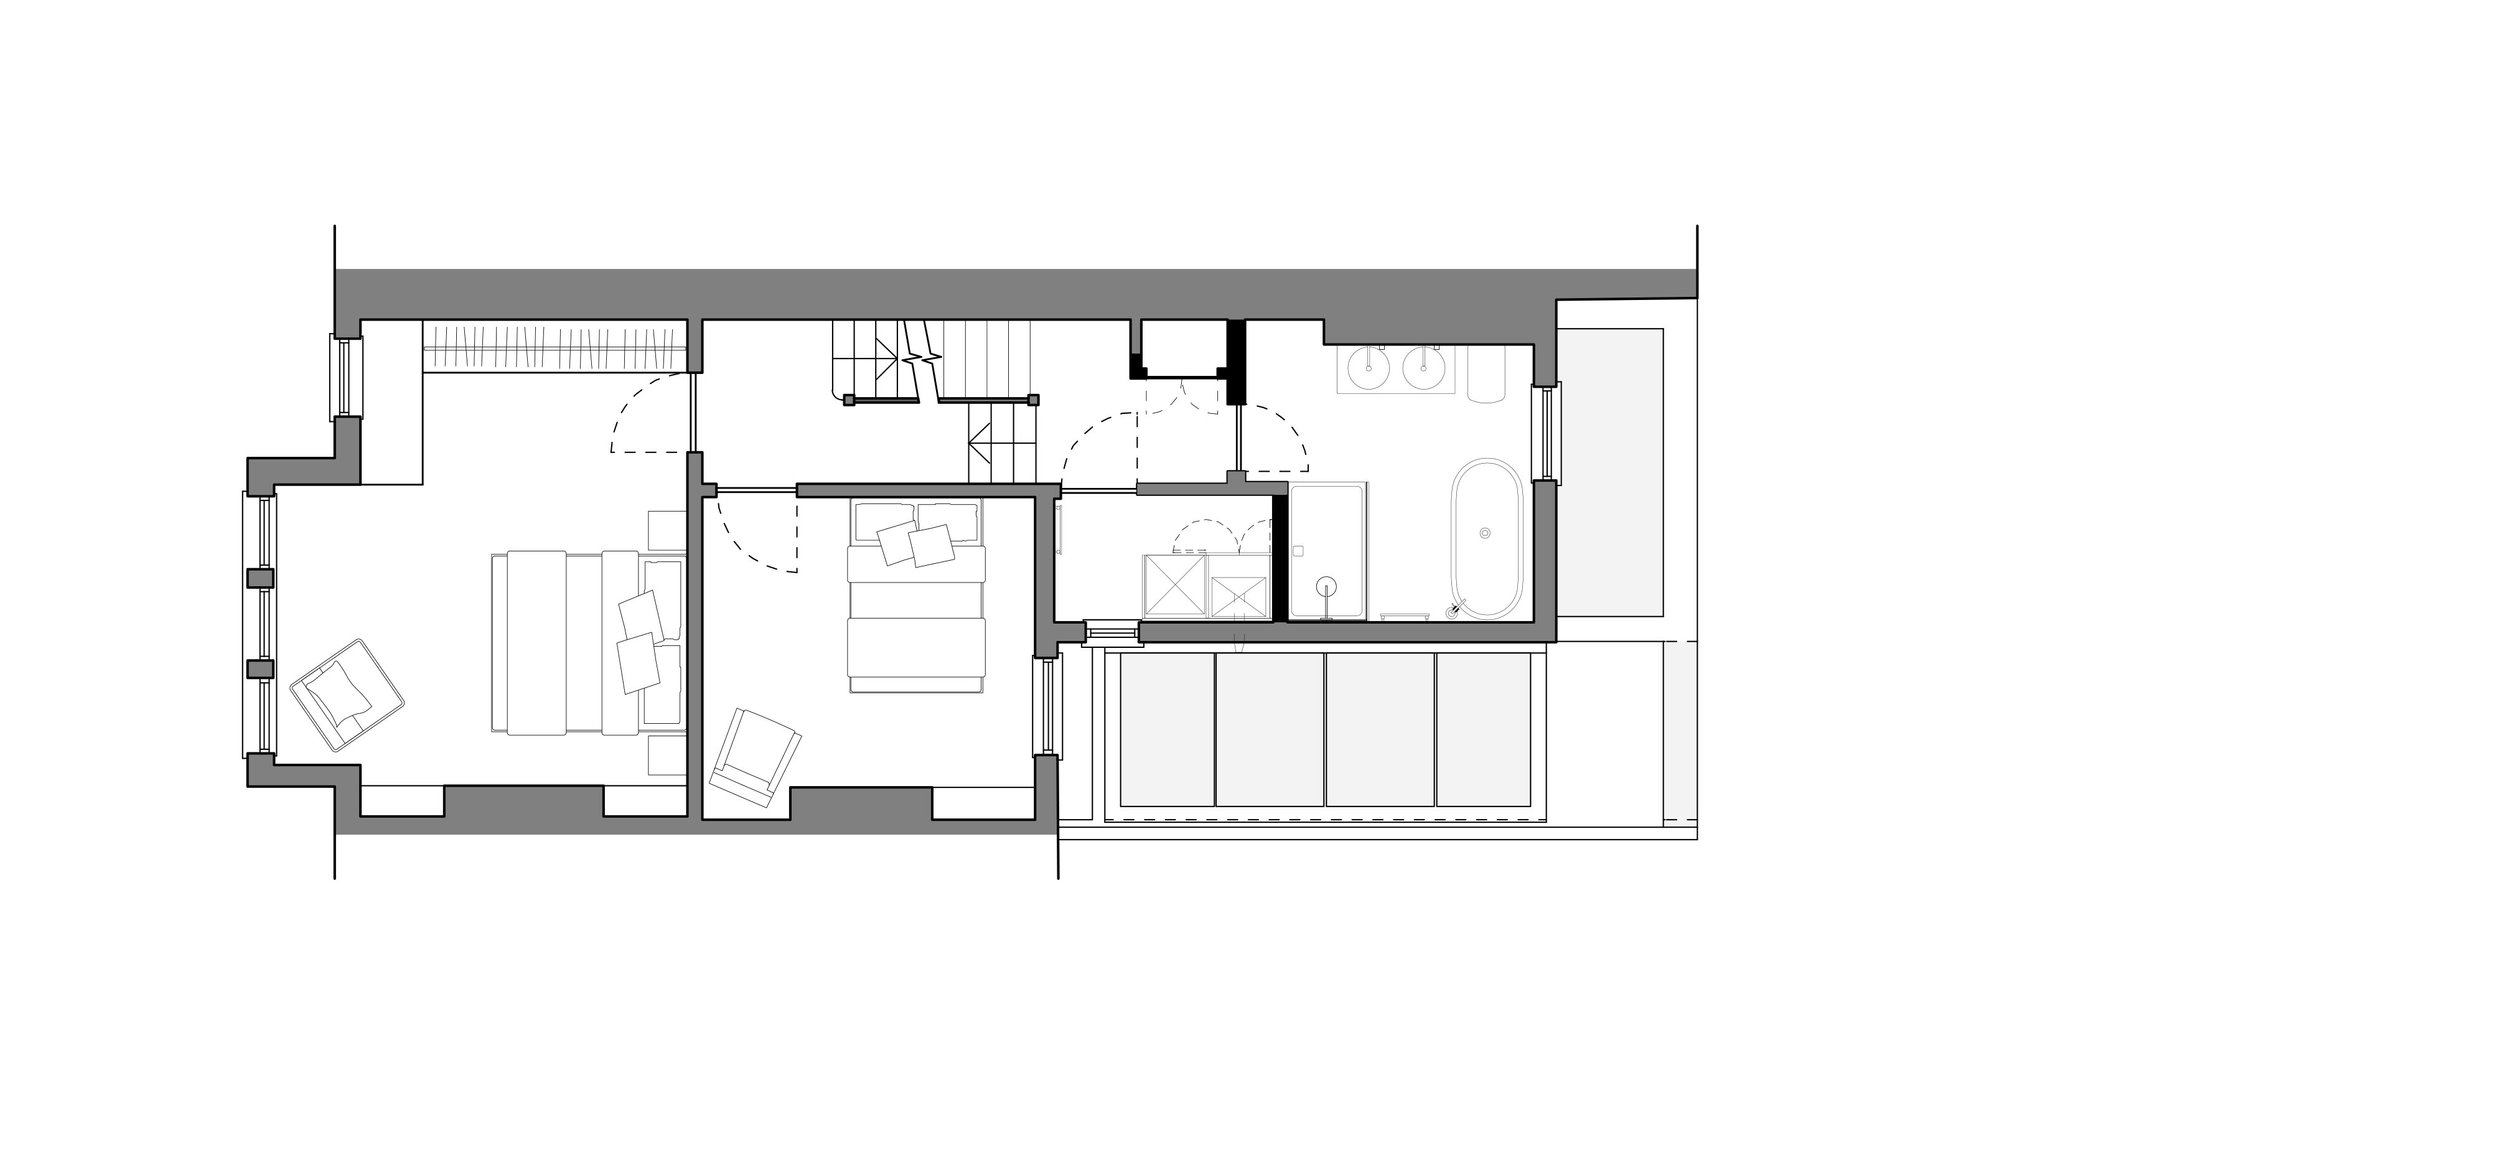 15-mcdowall-road-first-floor-plan-interior-design-architecture-london-uk-rider-stirland-architects.jpg